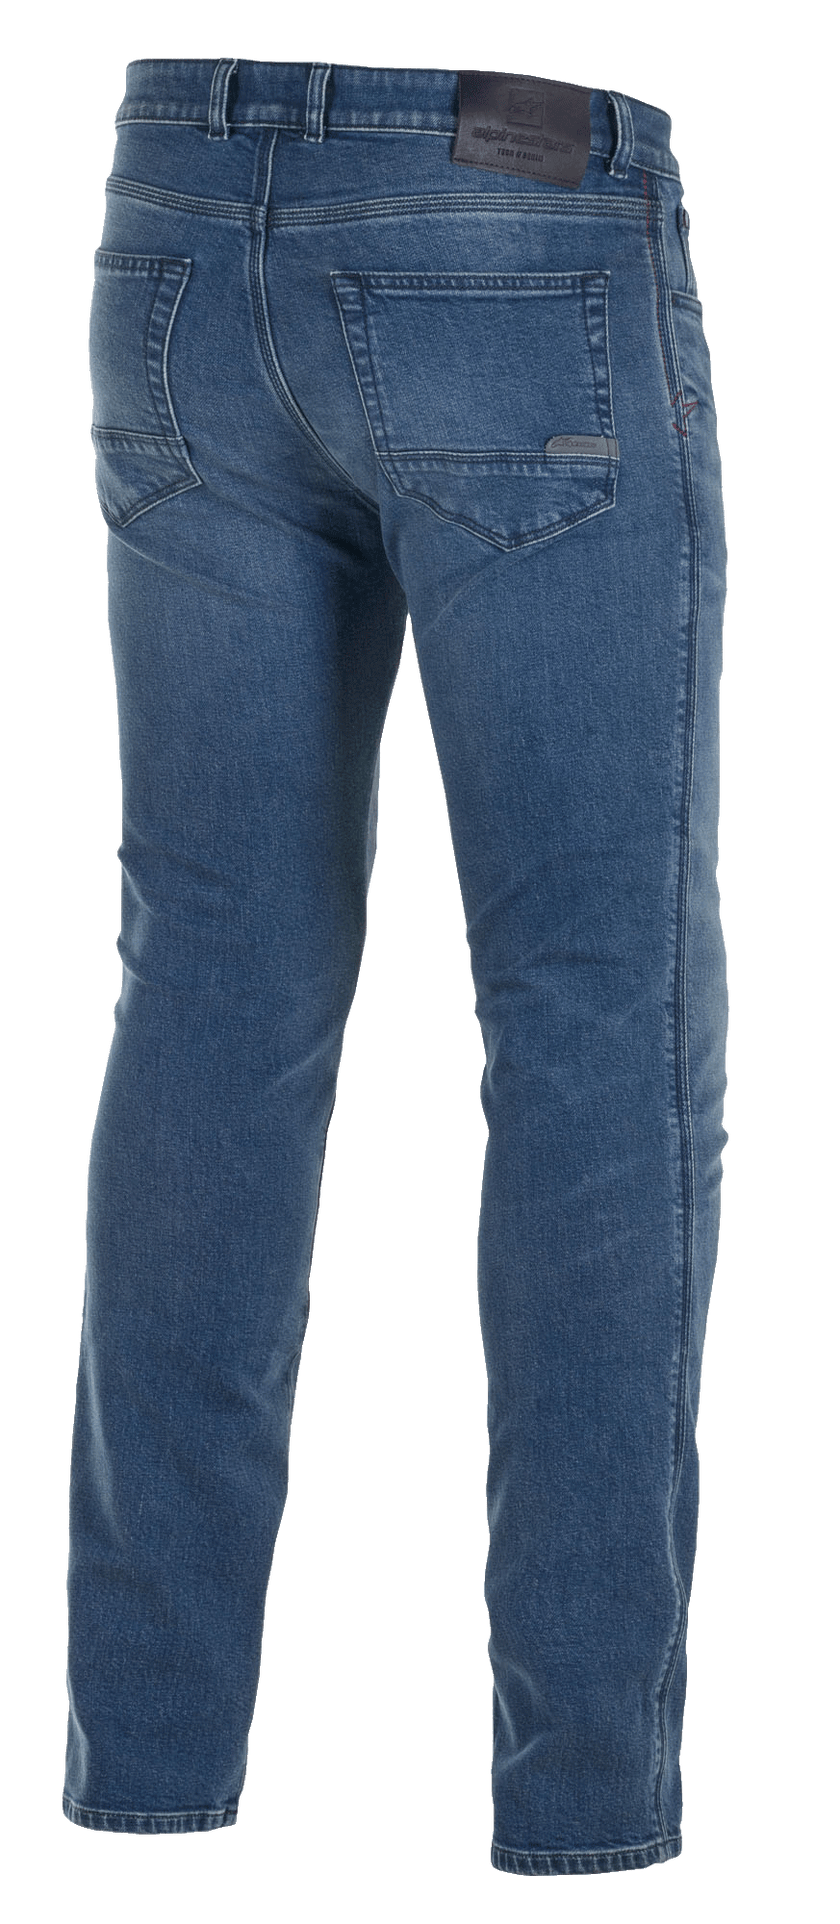 Copper V2 Plus Denim Pantalones - Regular Fit